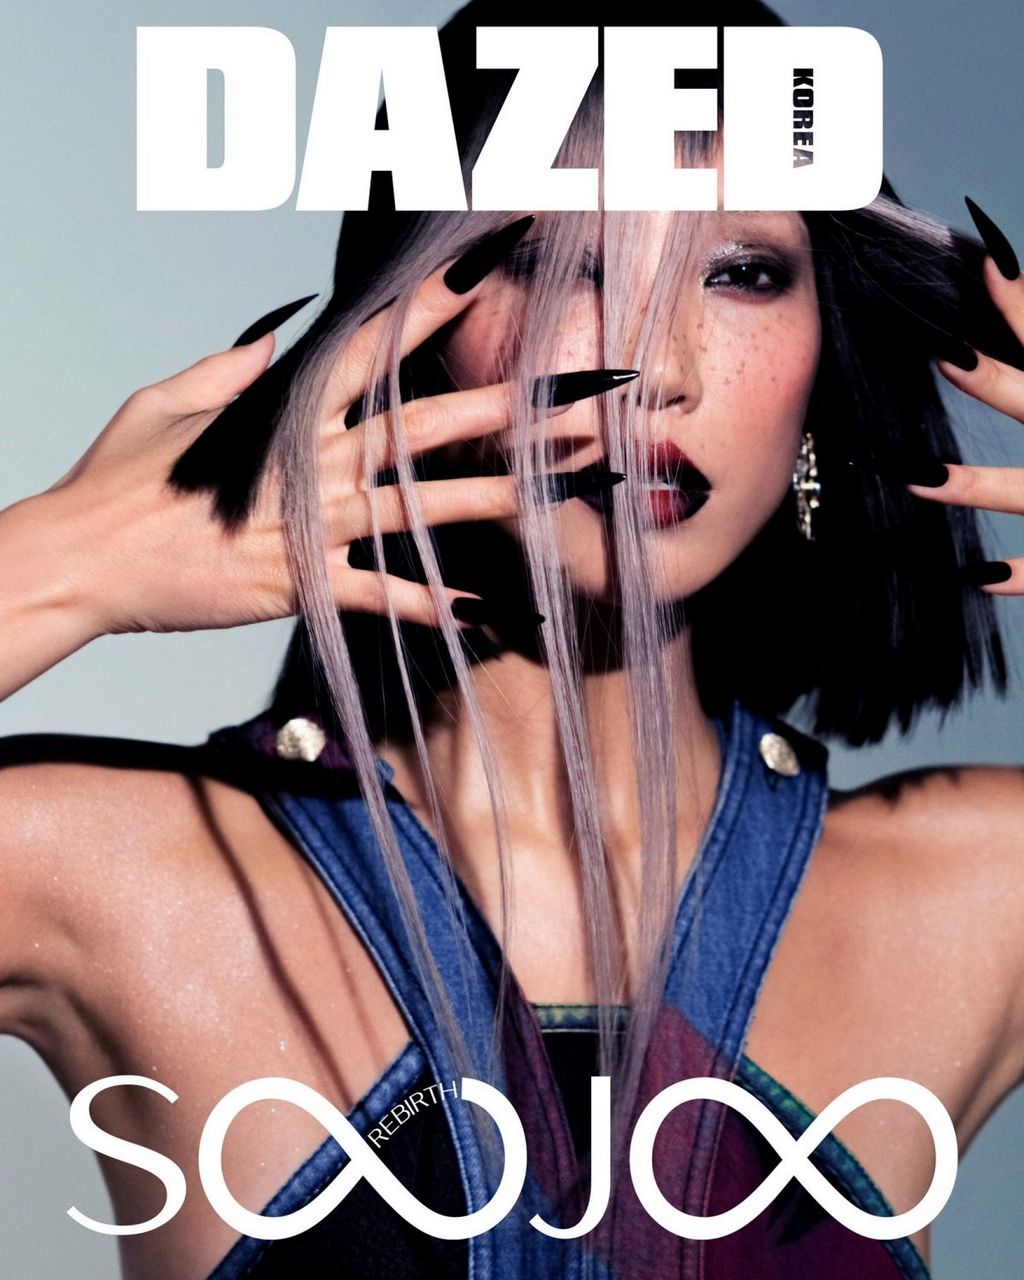 Soo Joo Park For Dazed Magazine Korea February